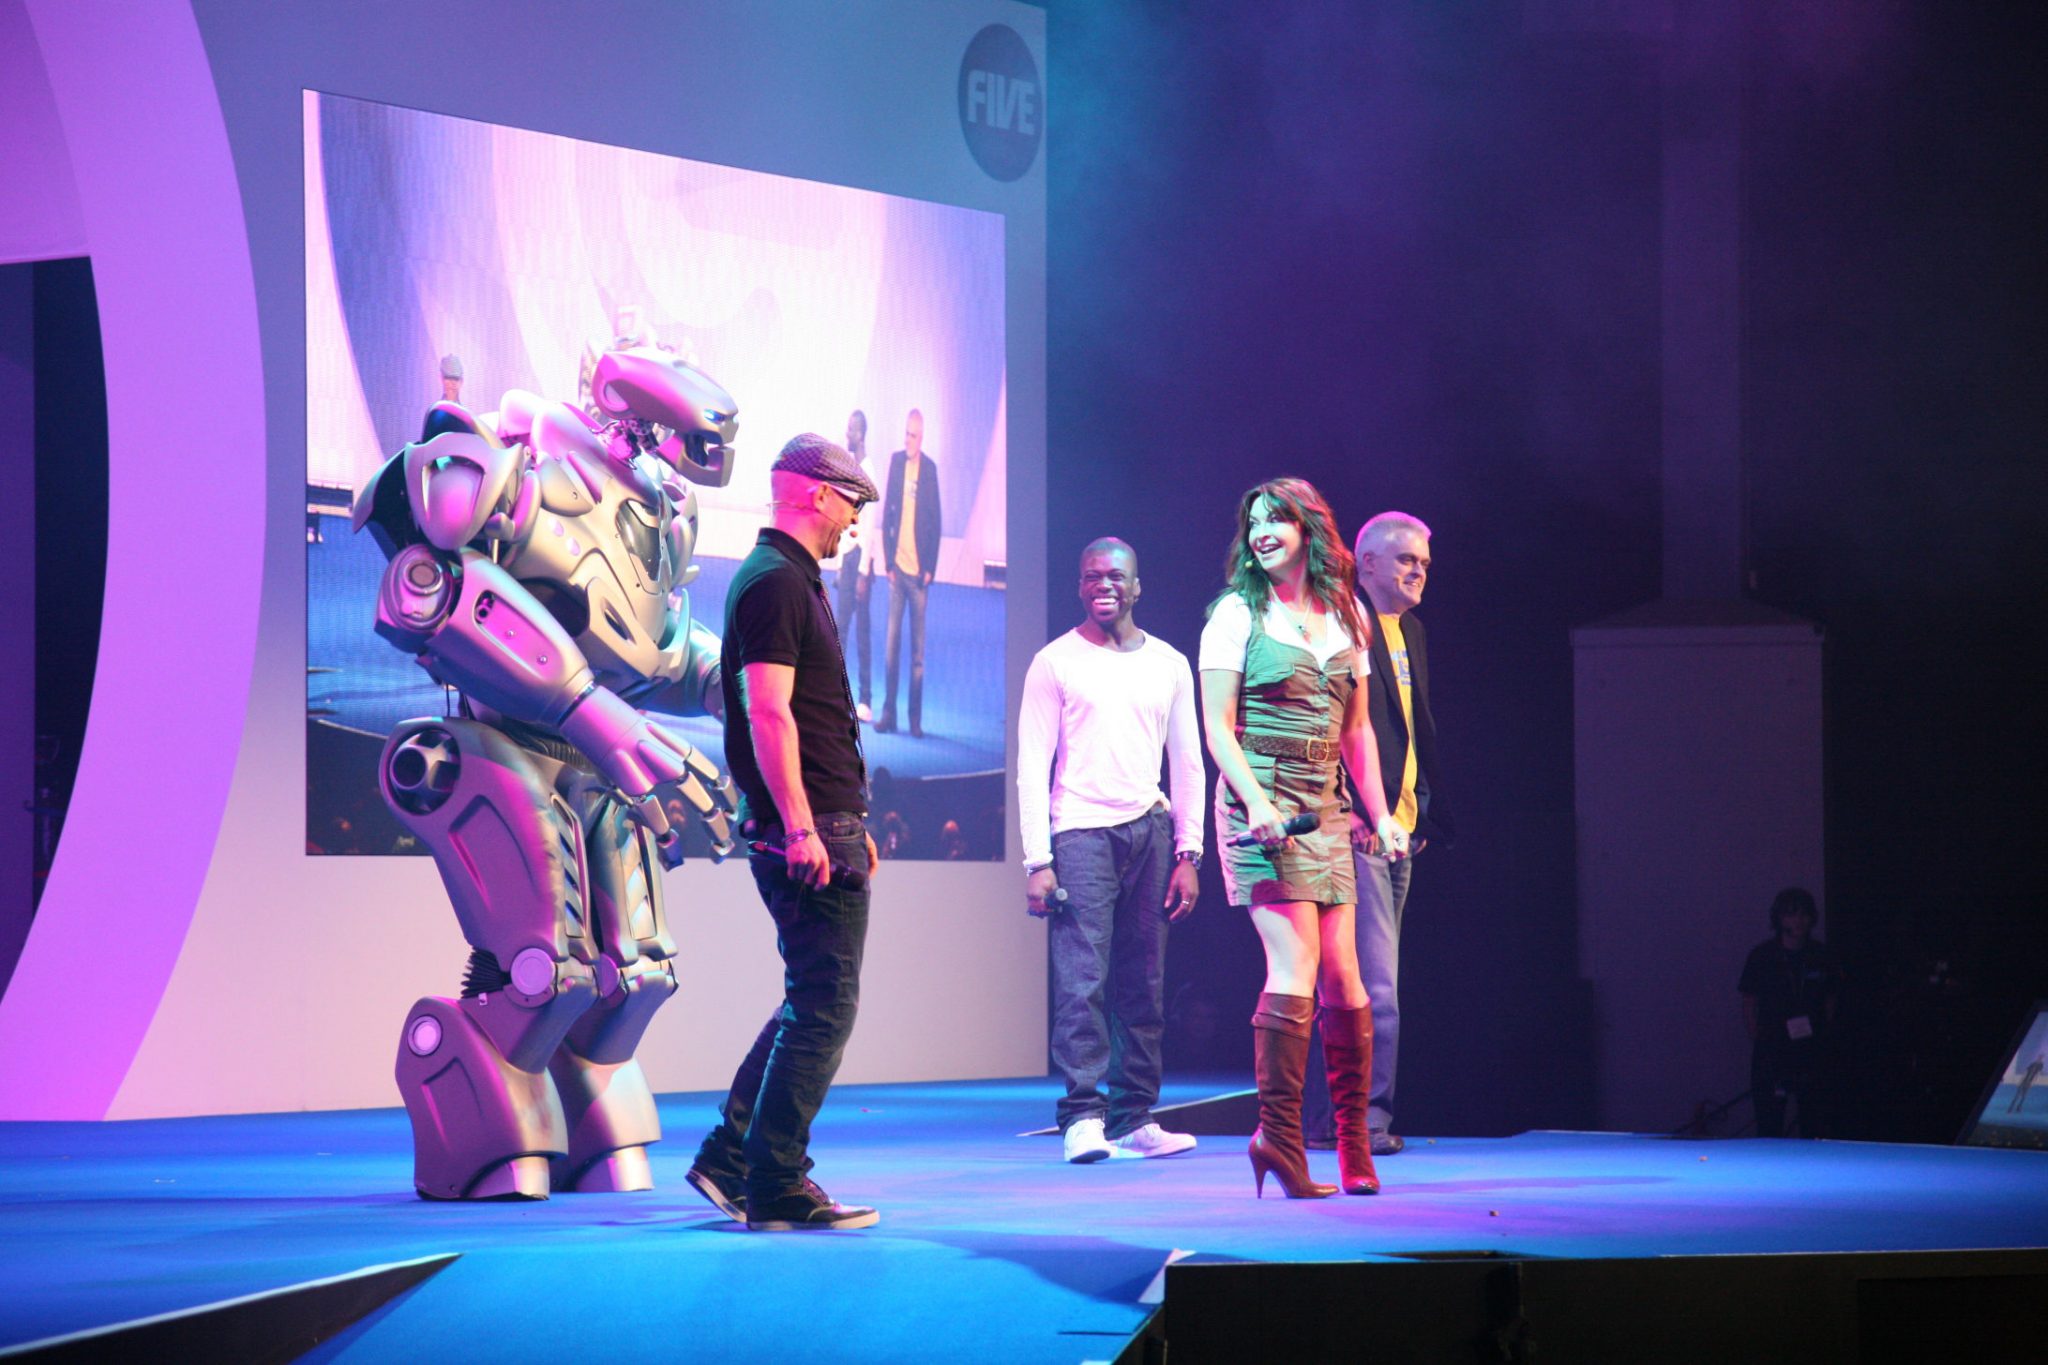 Titan the Robot on stage at the Gadget Show Live with Jason Bradbury, Suzi Perry, Otis Deley and John Bentley.